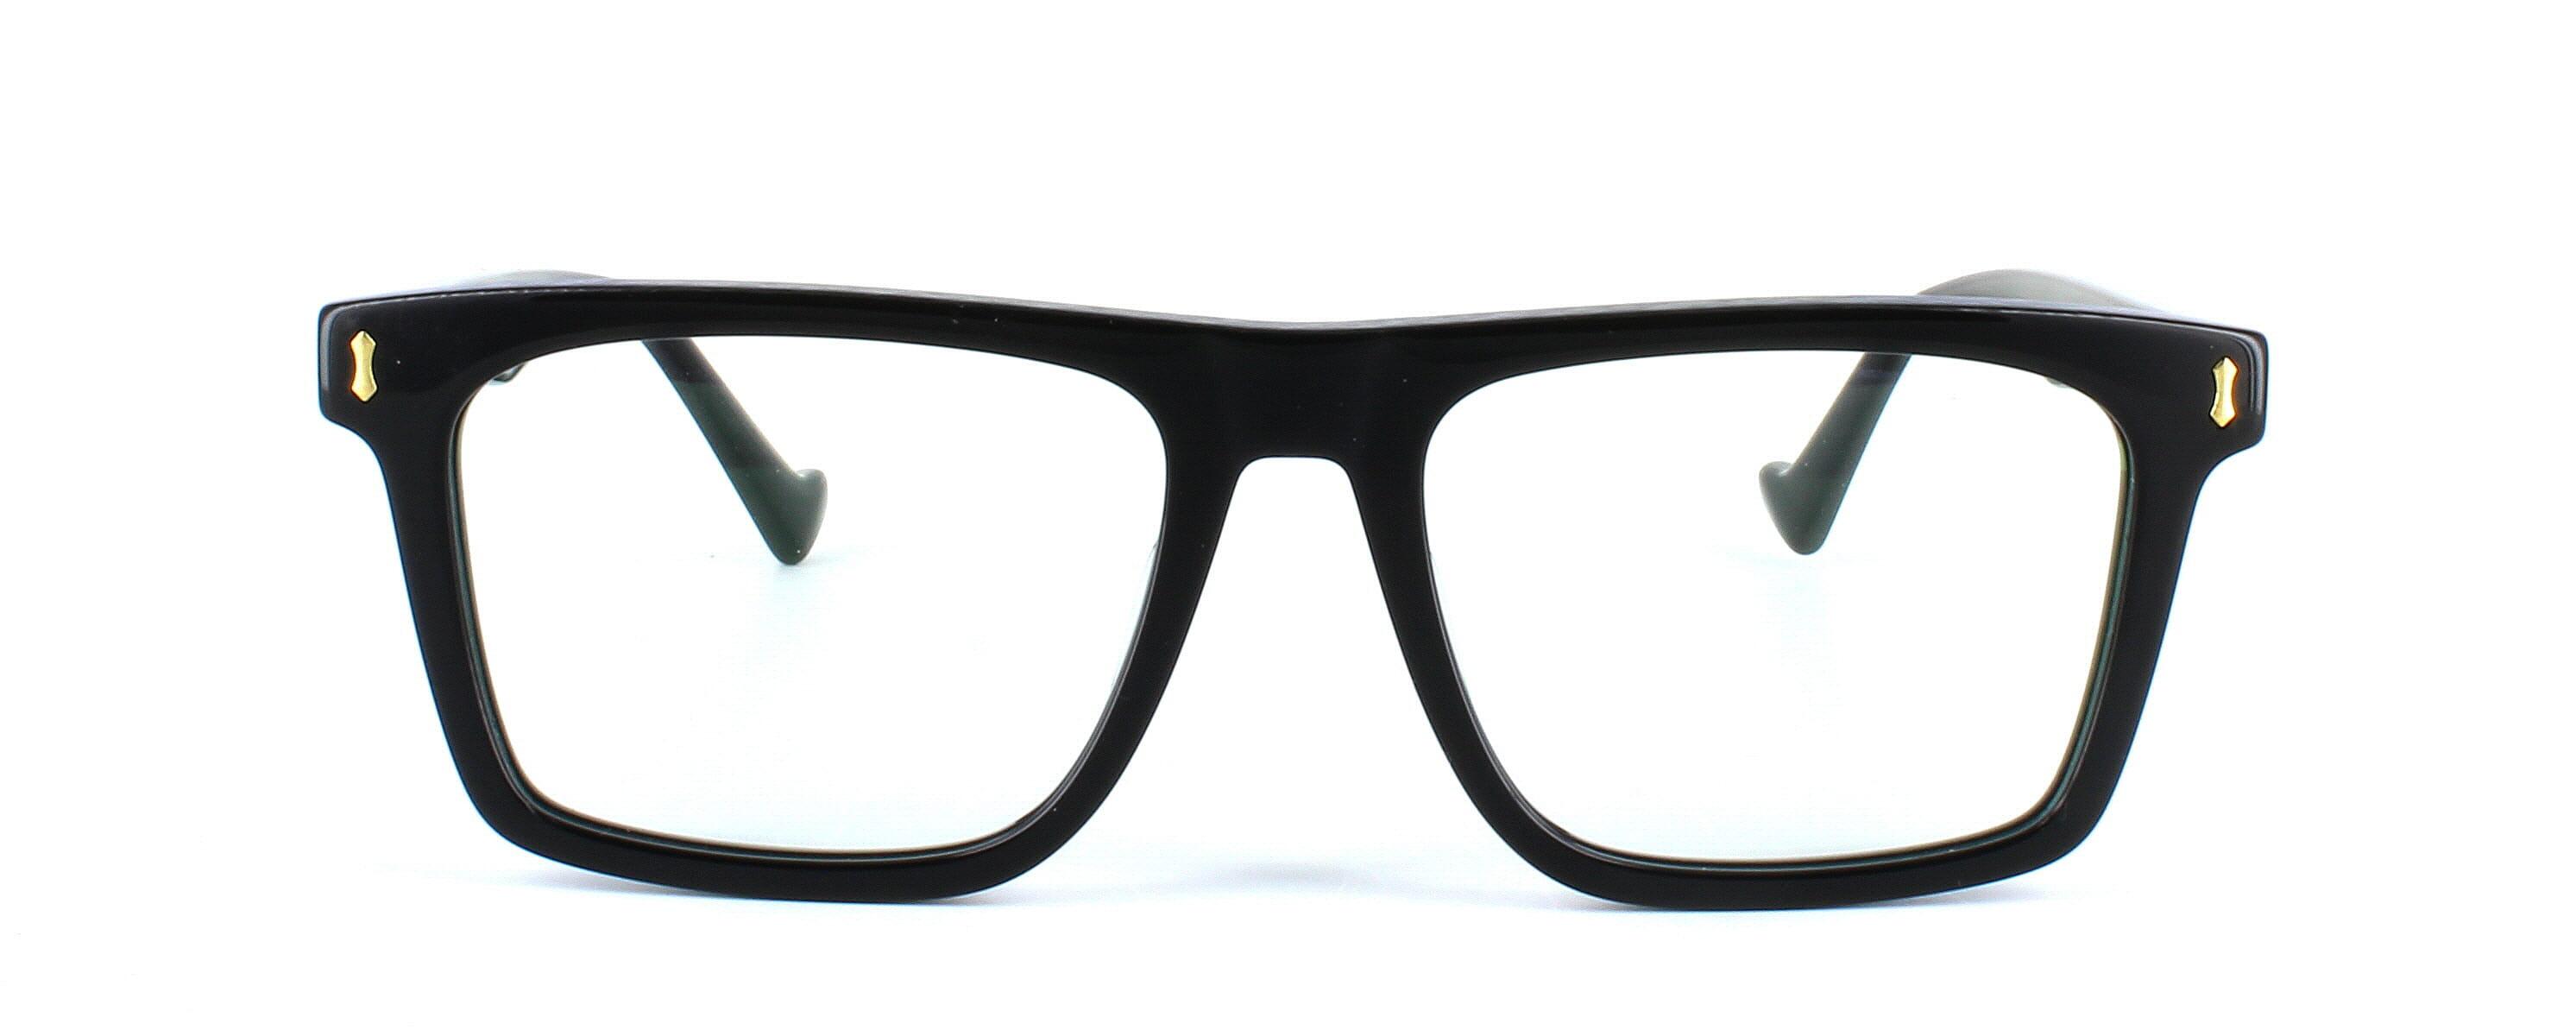 Edward Scotts PS8809 - Shiny black - Gent's bold chunky acetate glasses with rectangular shaped lenses - image view 2